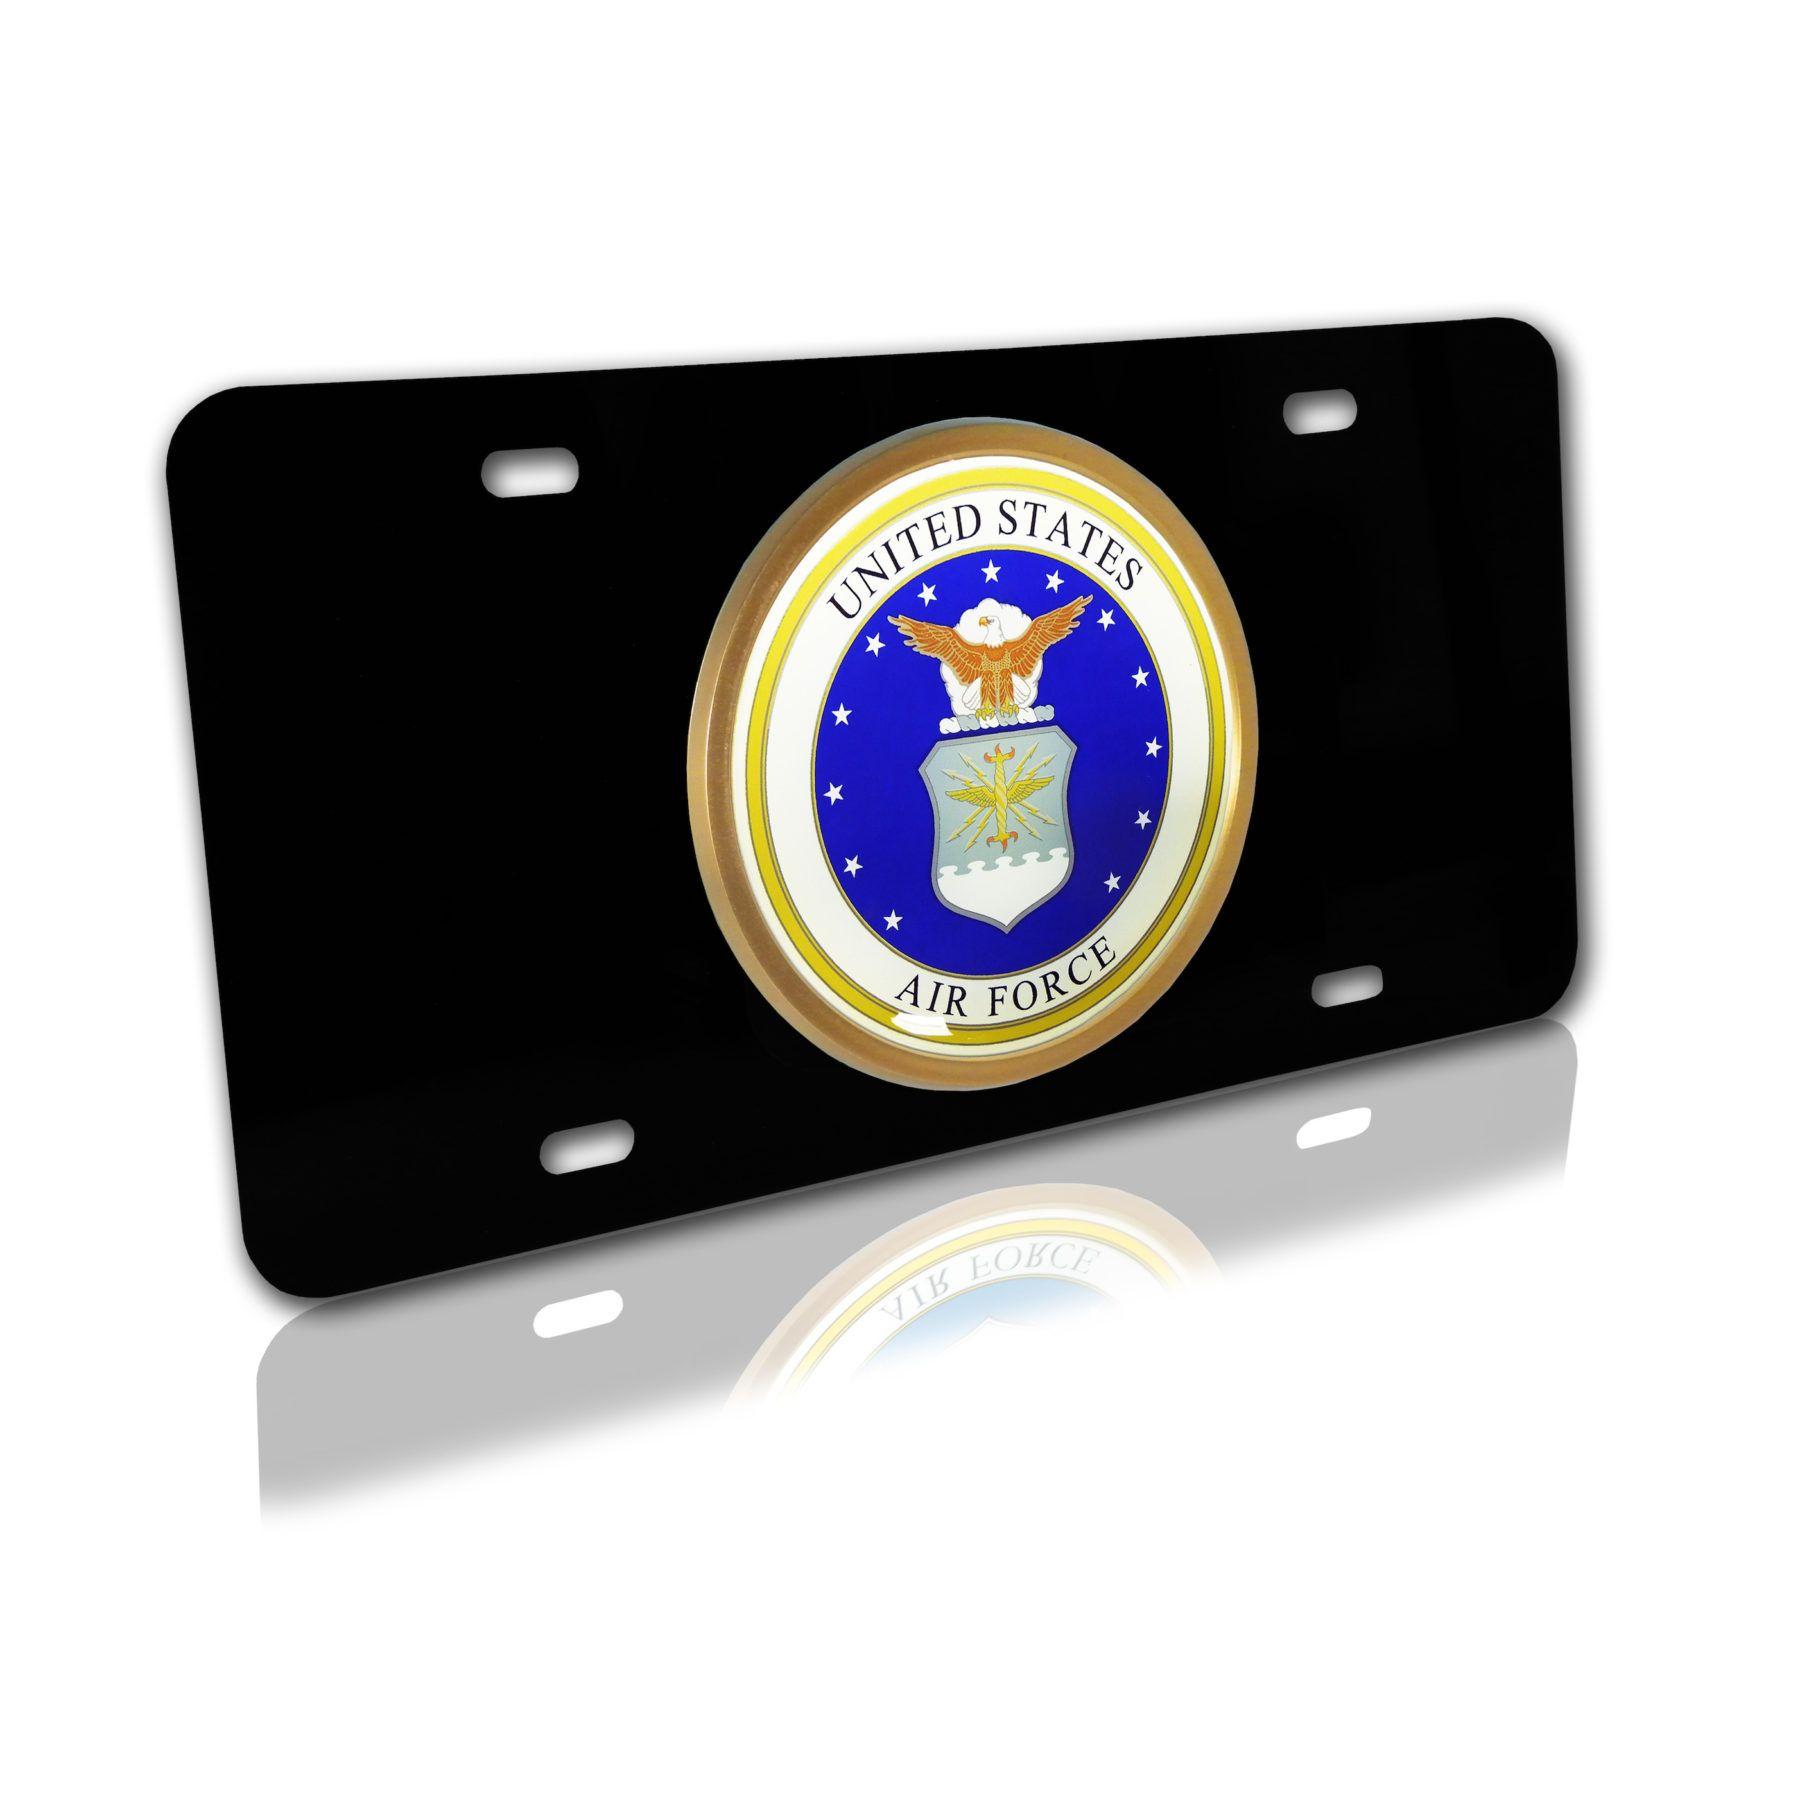 Air Force Seal Logo - Air Force Seal on Black License Plate | Elektroplate